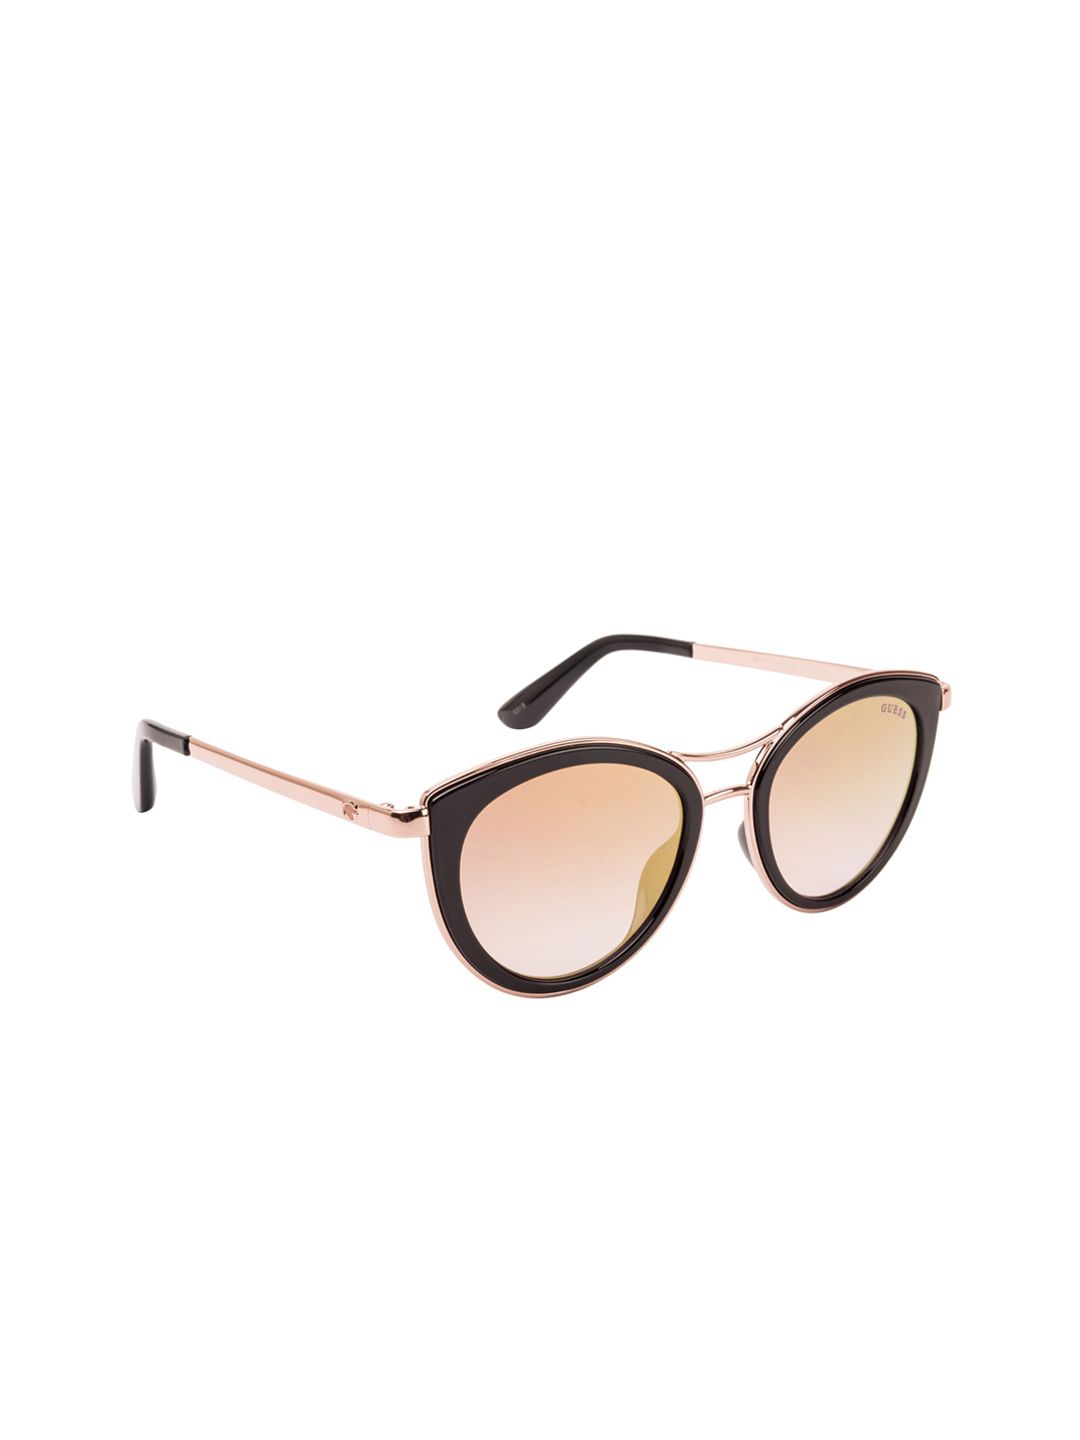 GUESS Women Round Sunglasses GU7490 51 01Z Price in India